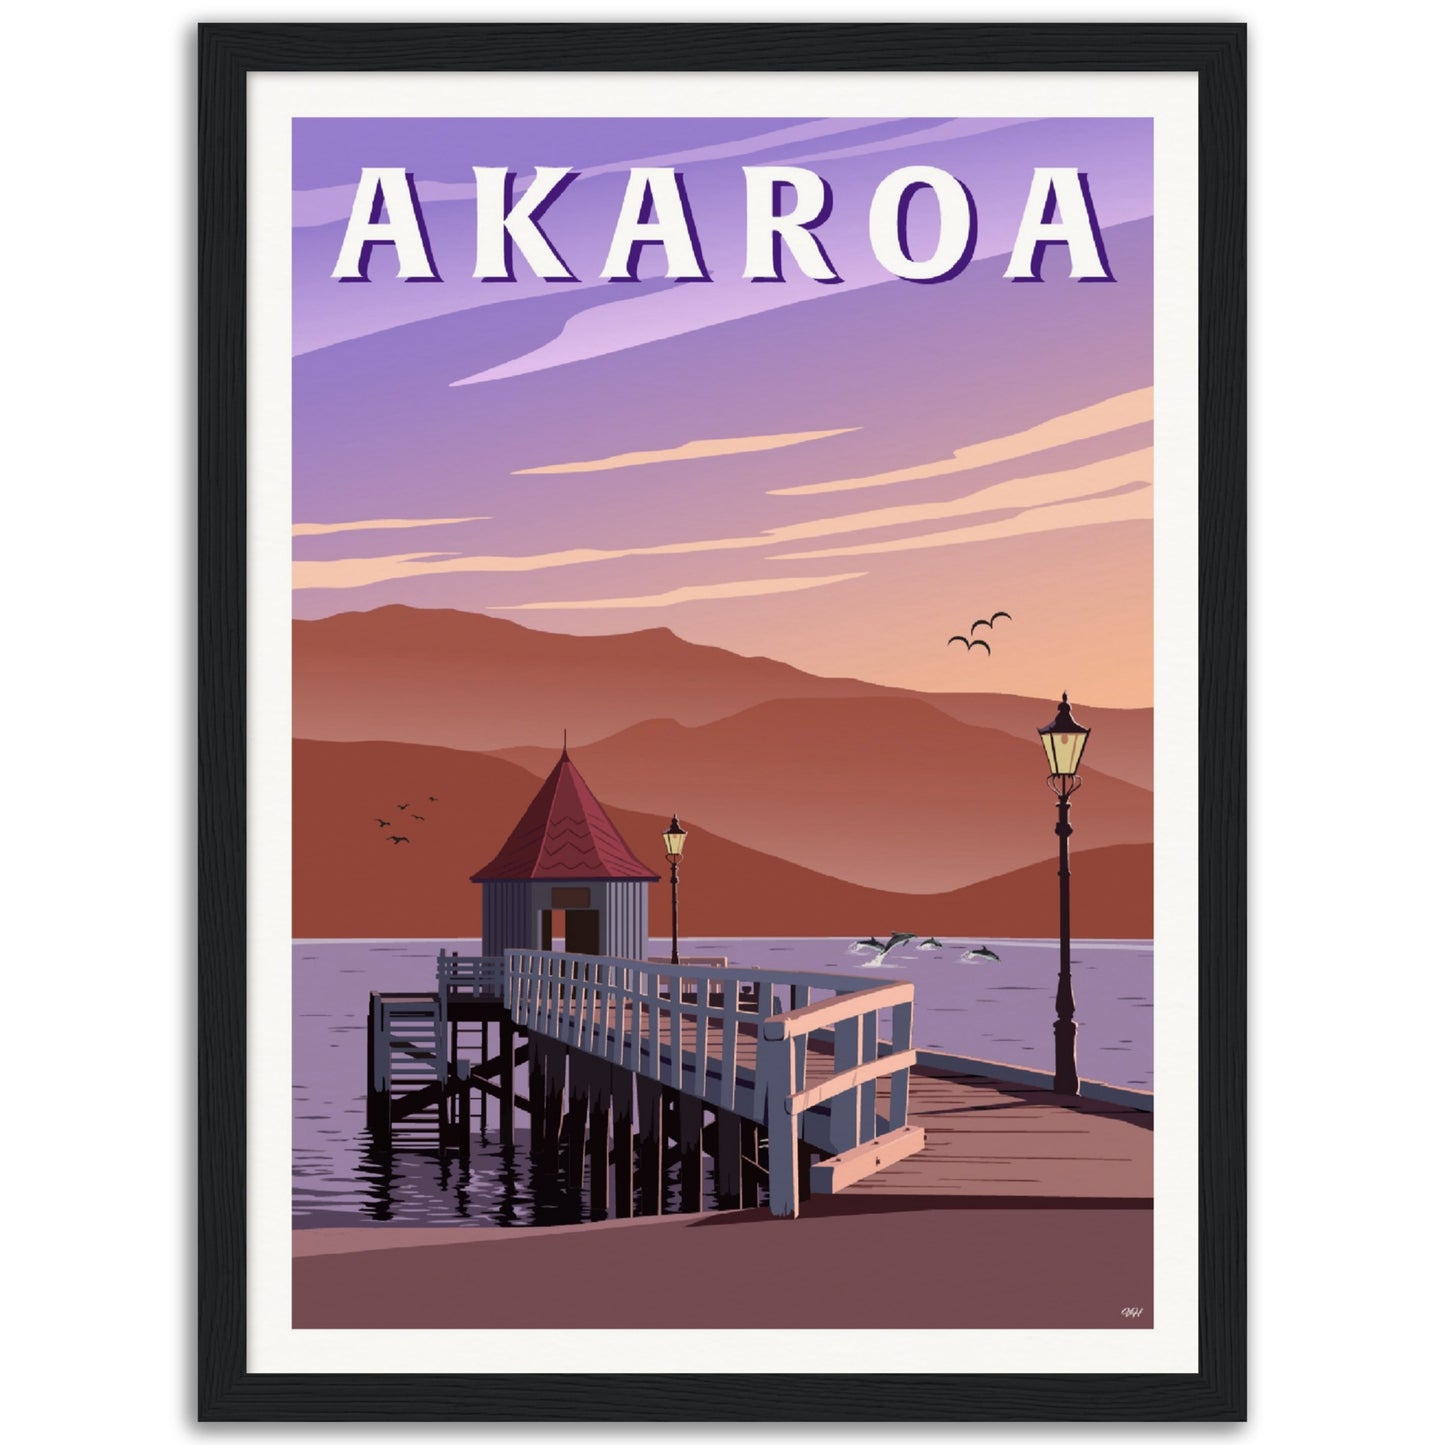 Akaroa Travel Poster, New Zealand